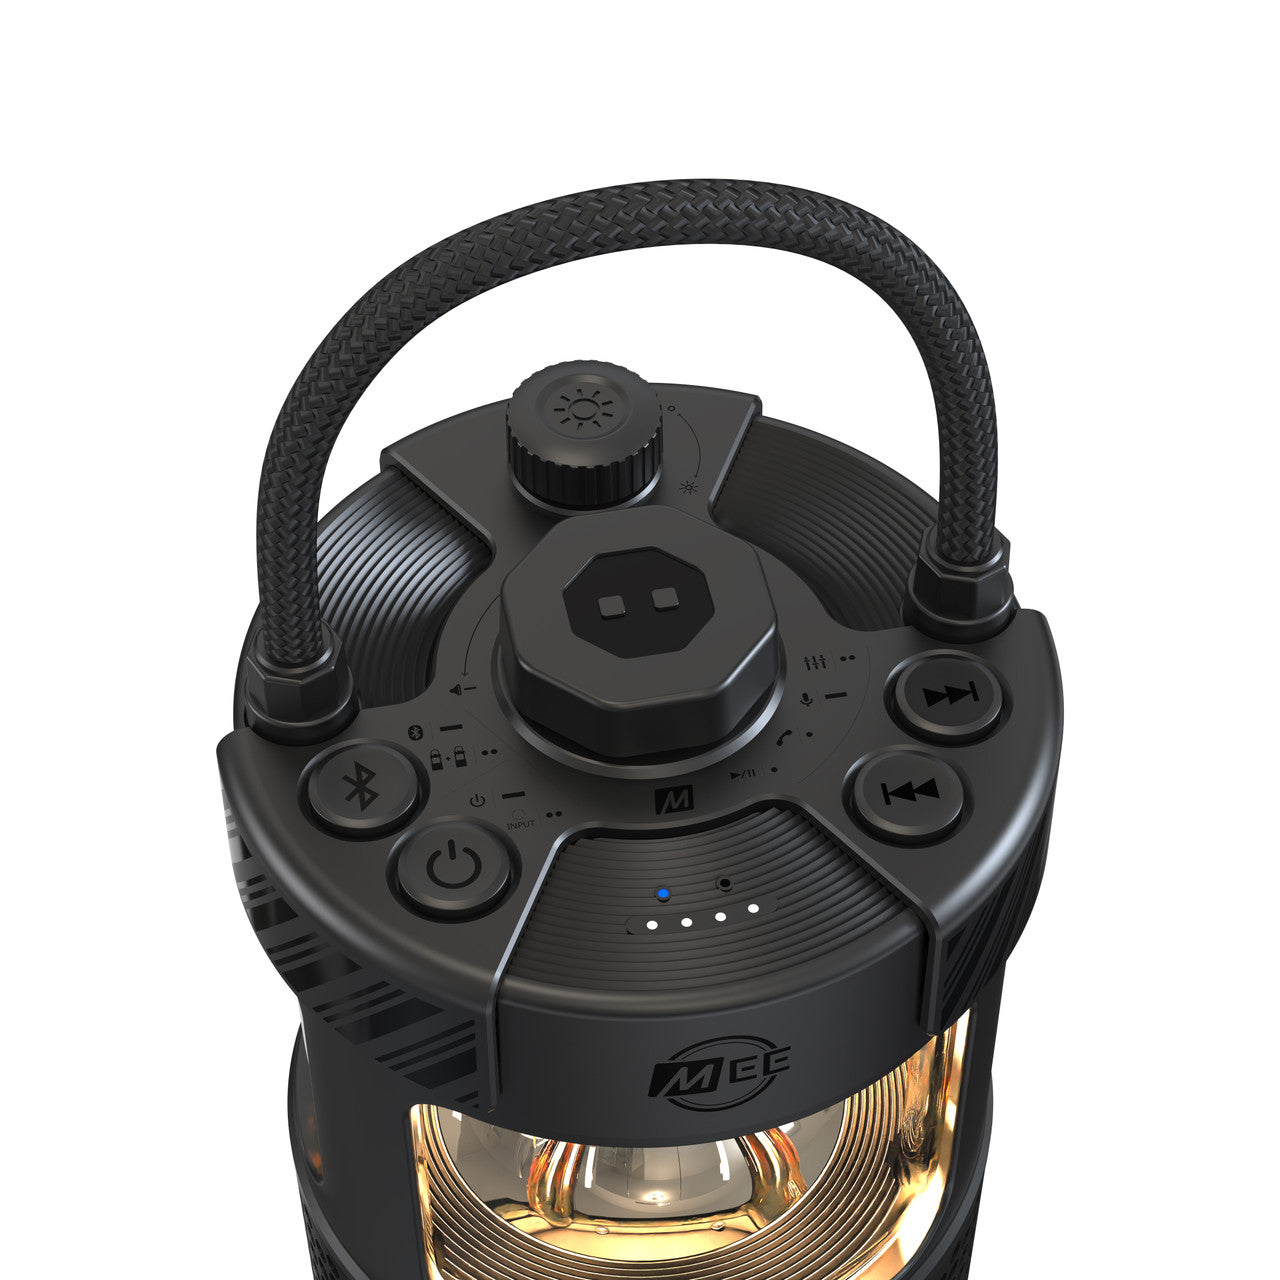 Image of lightSPKR Bluetooth Wireless Speaker with Camping Lantern.